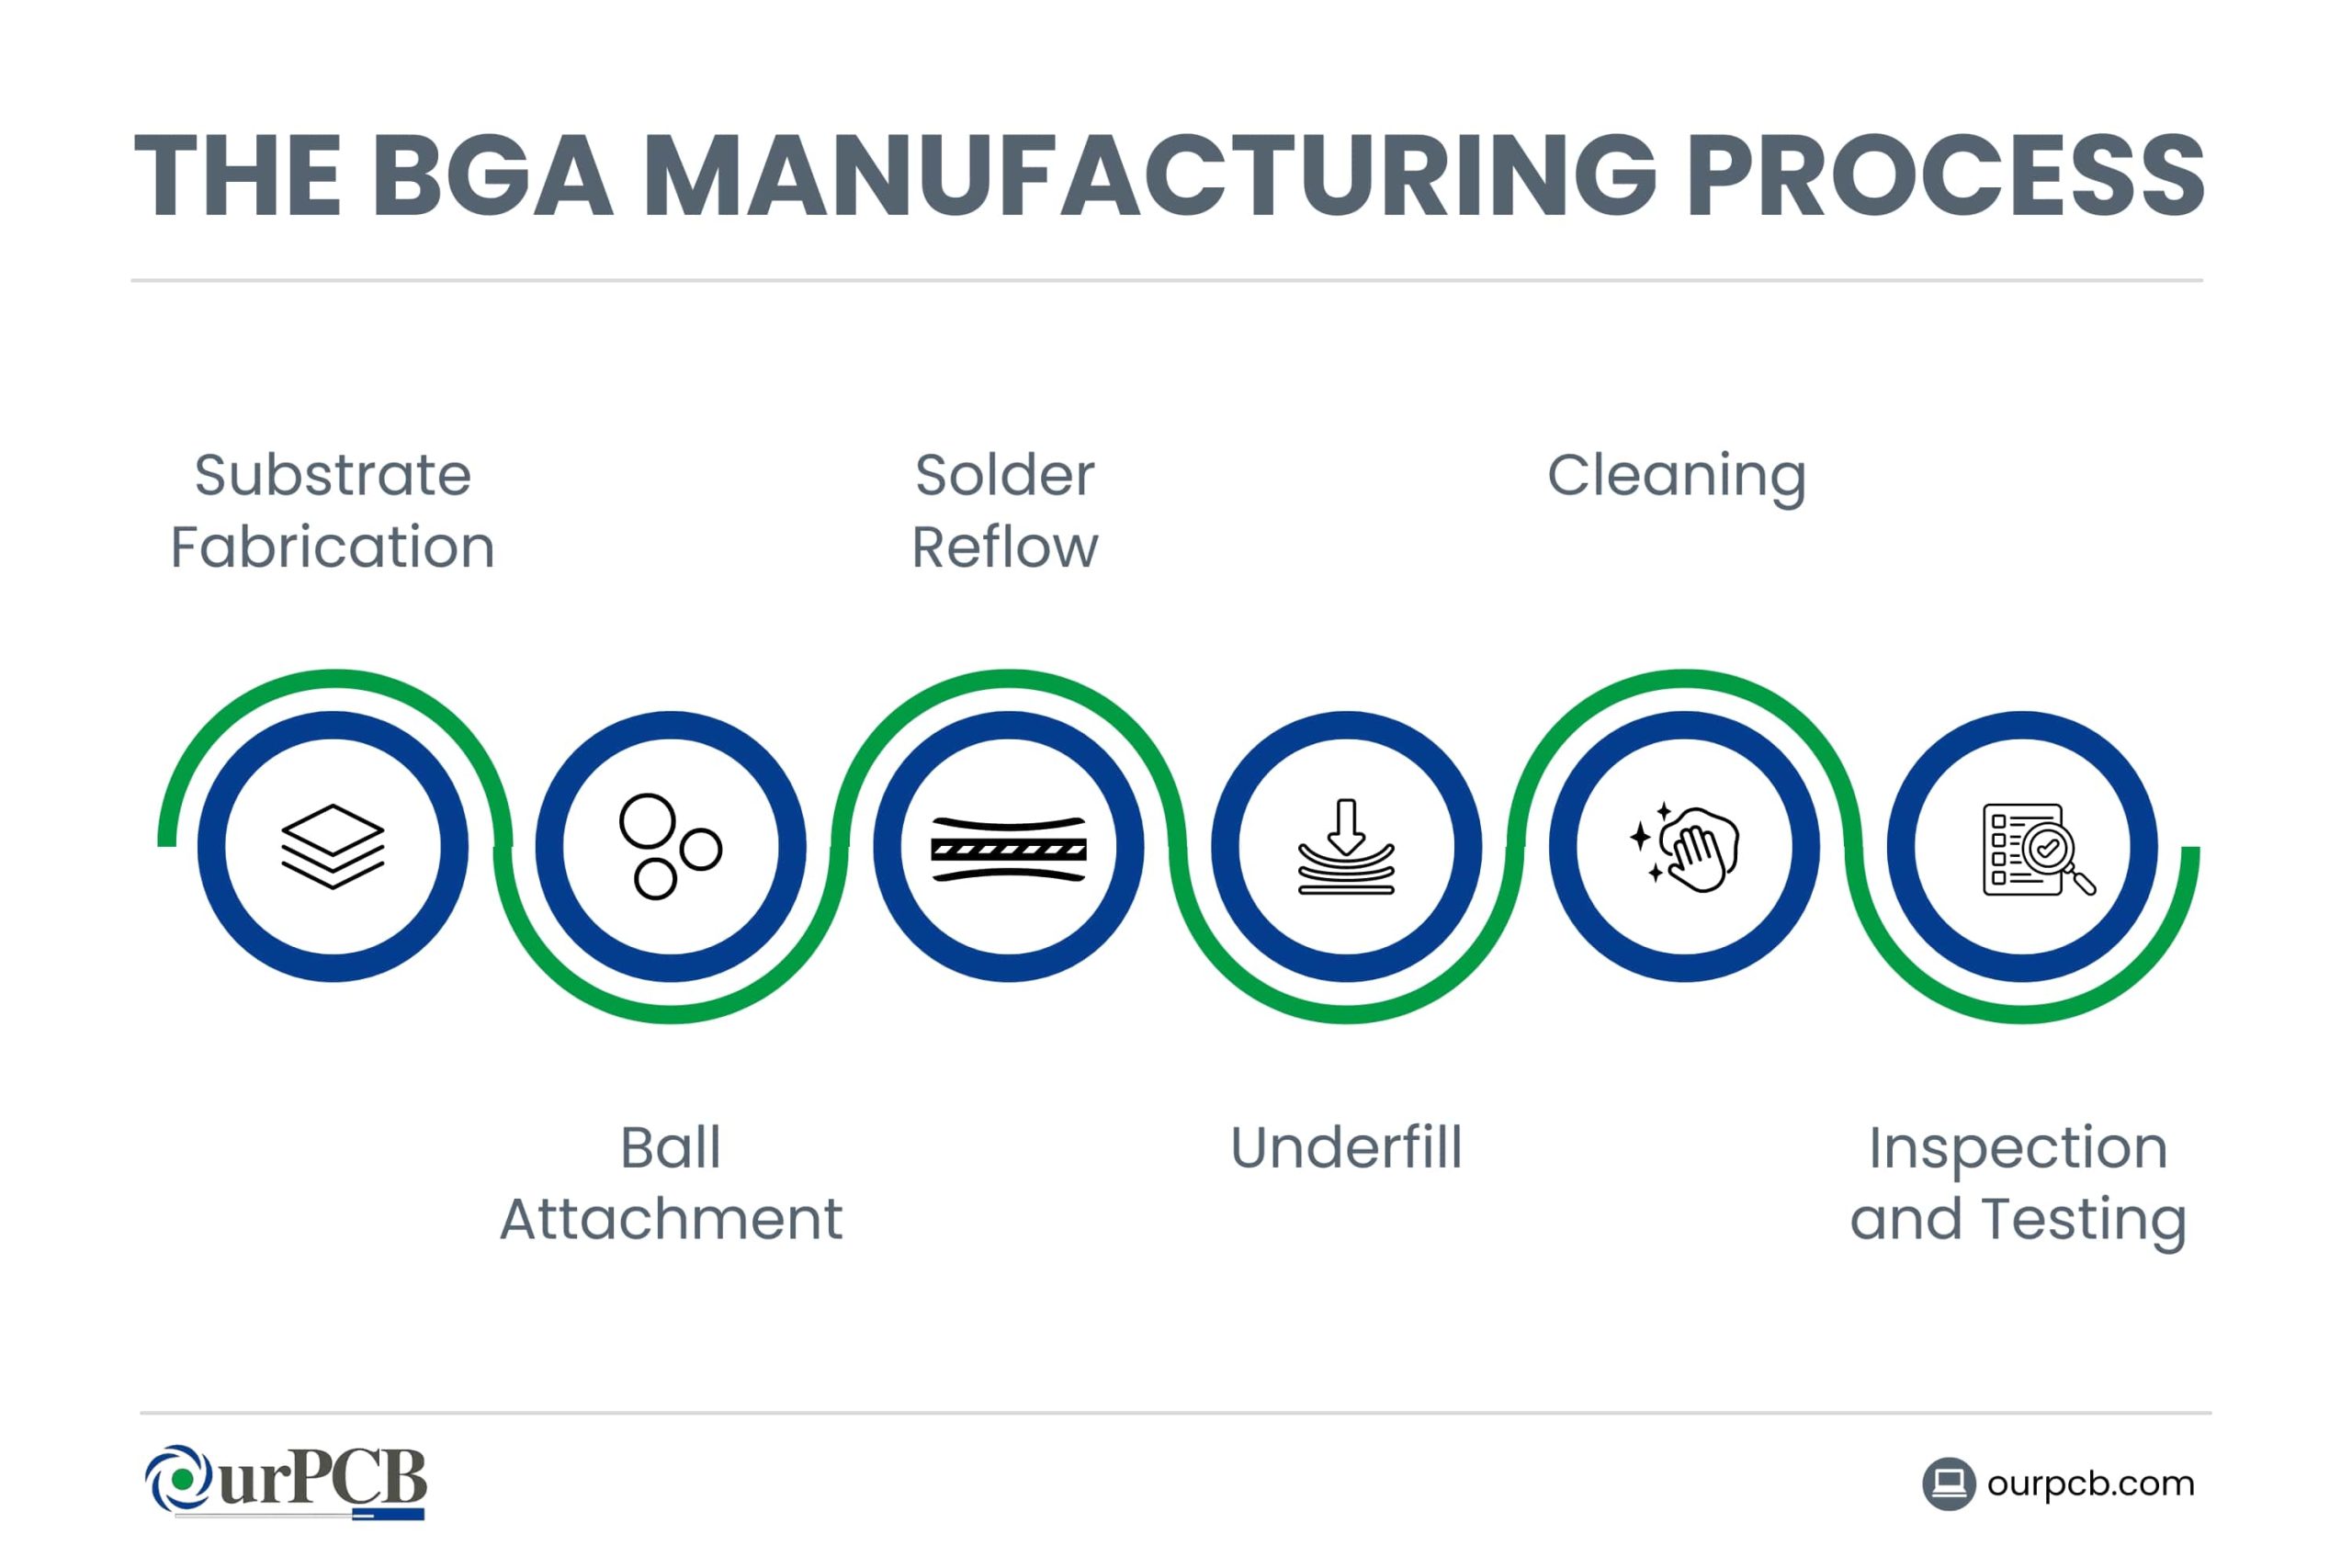 Manufacturing Process of BGA